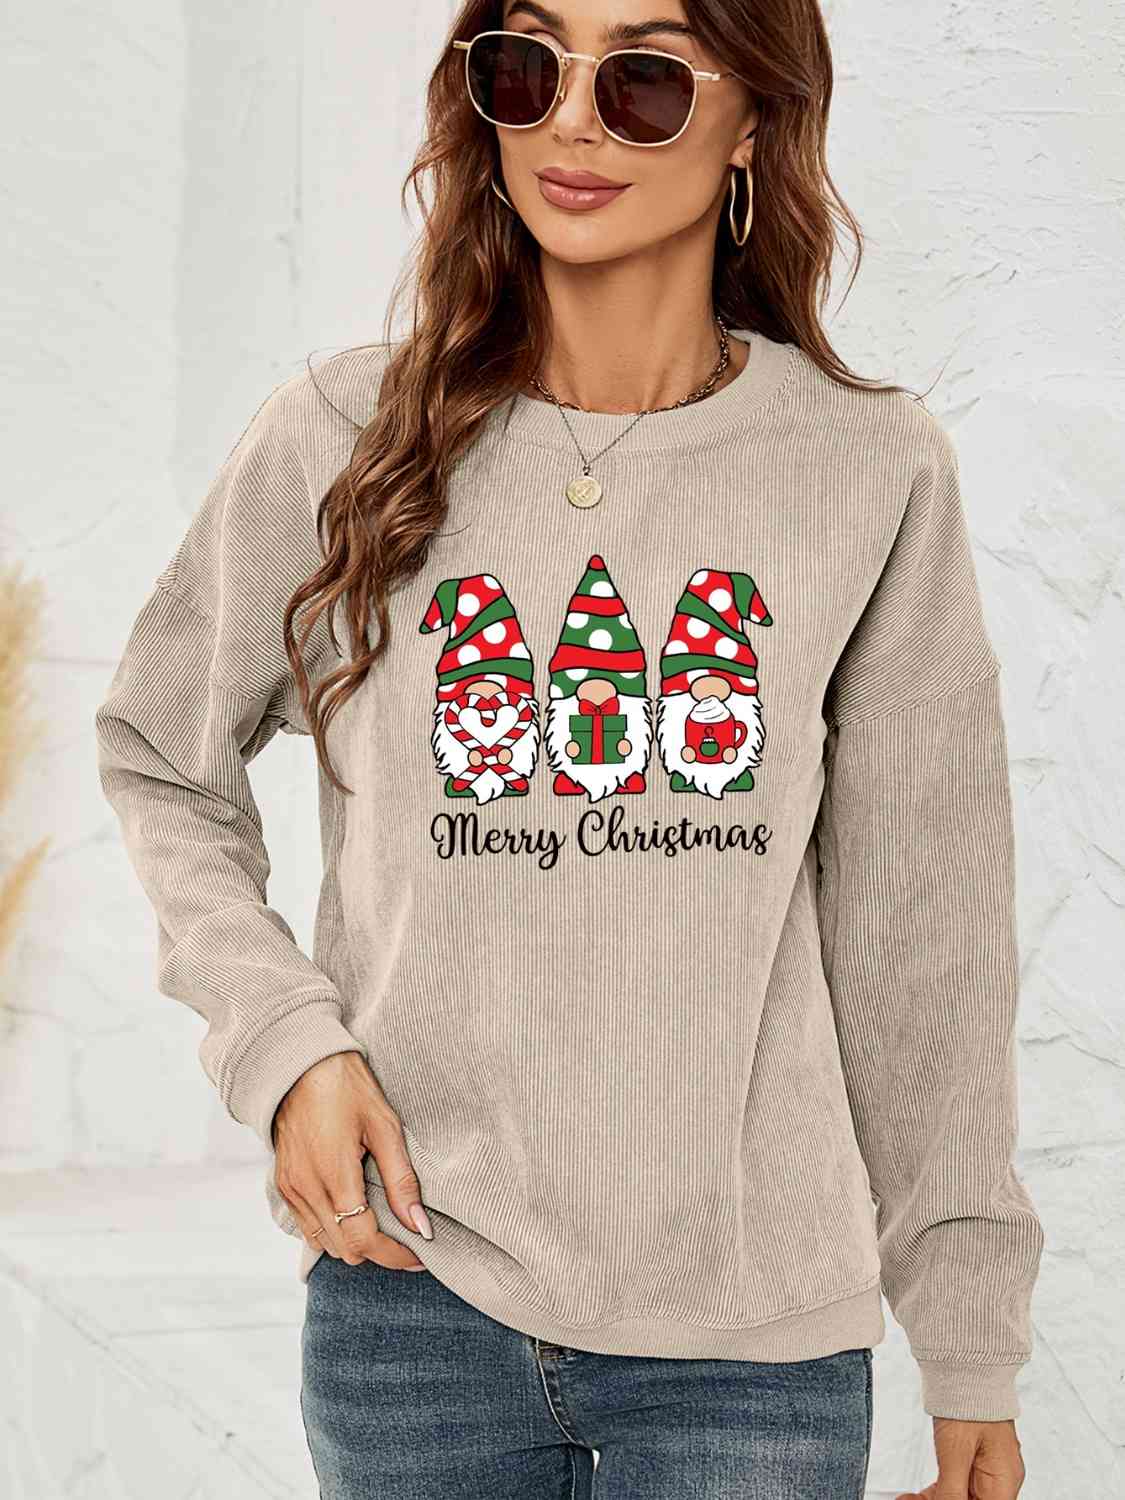 MERRY CHRISTMAS Graphic Sweatshirt - Guy Christopher